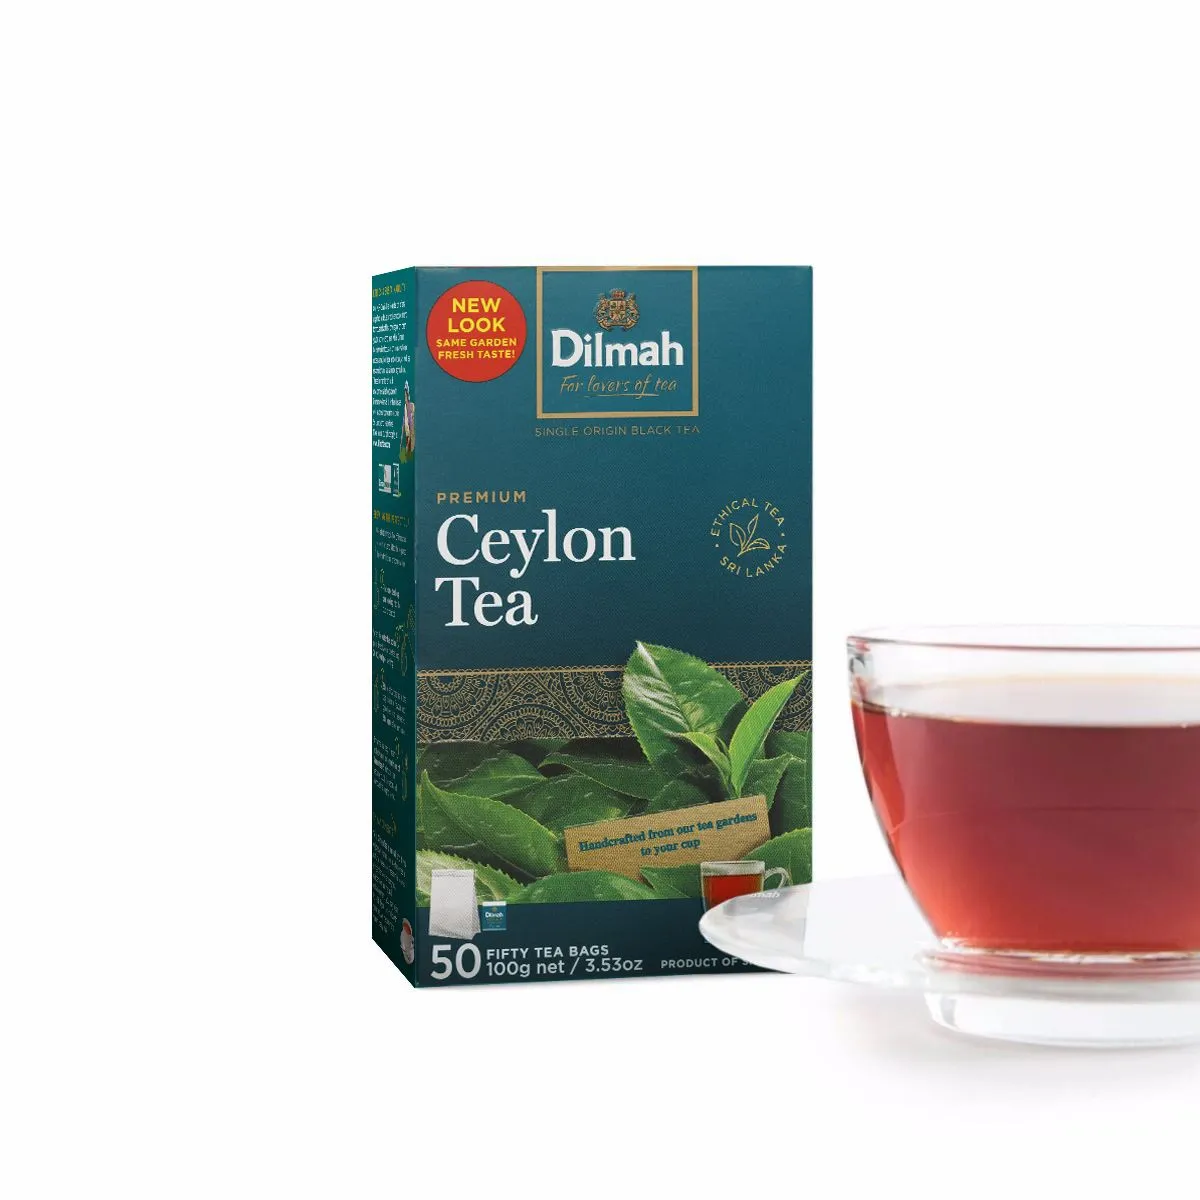 Pack of 50 tea bags of Premium Ceylon black tea with cup